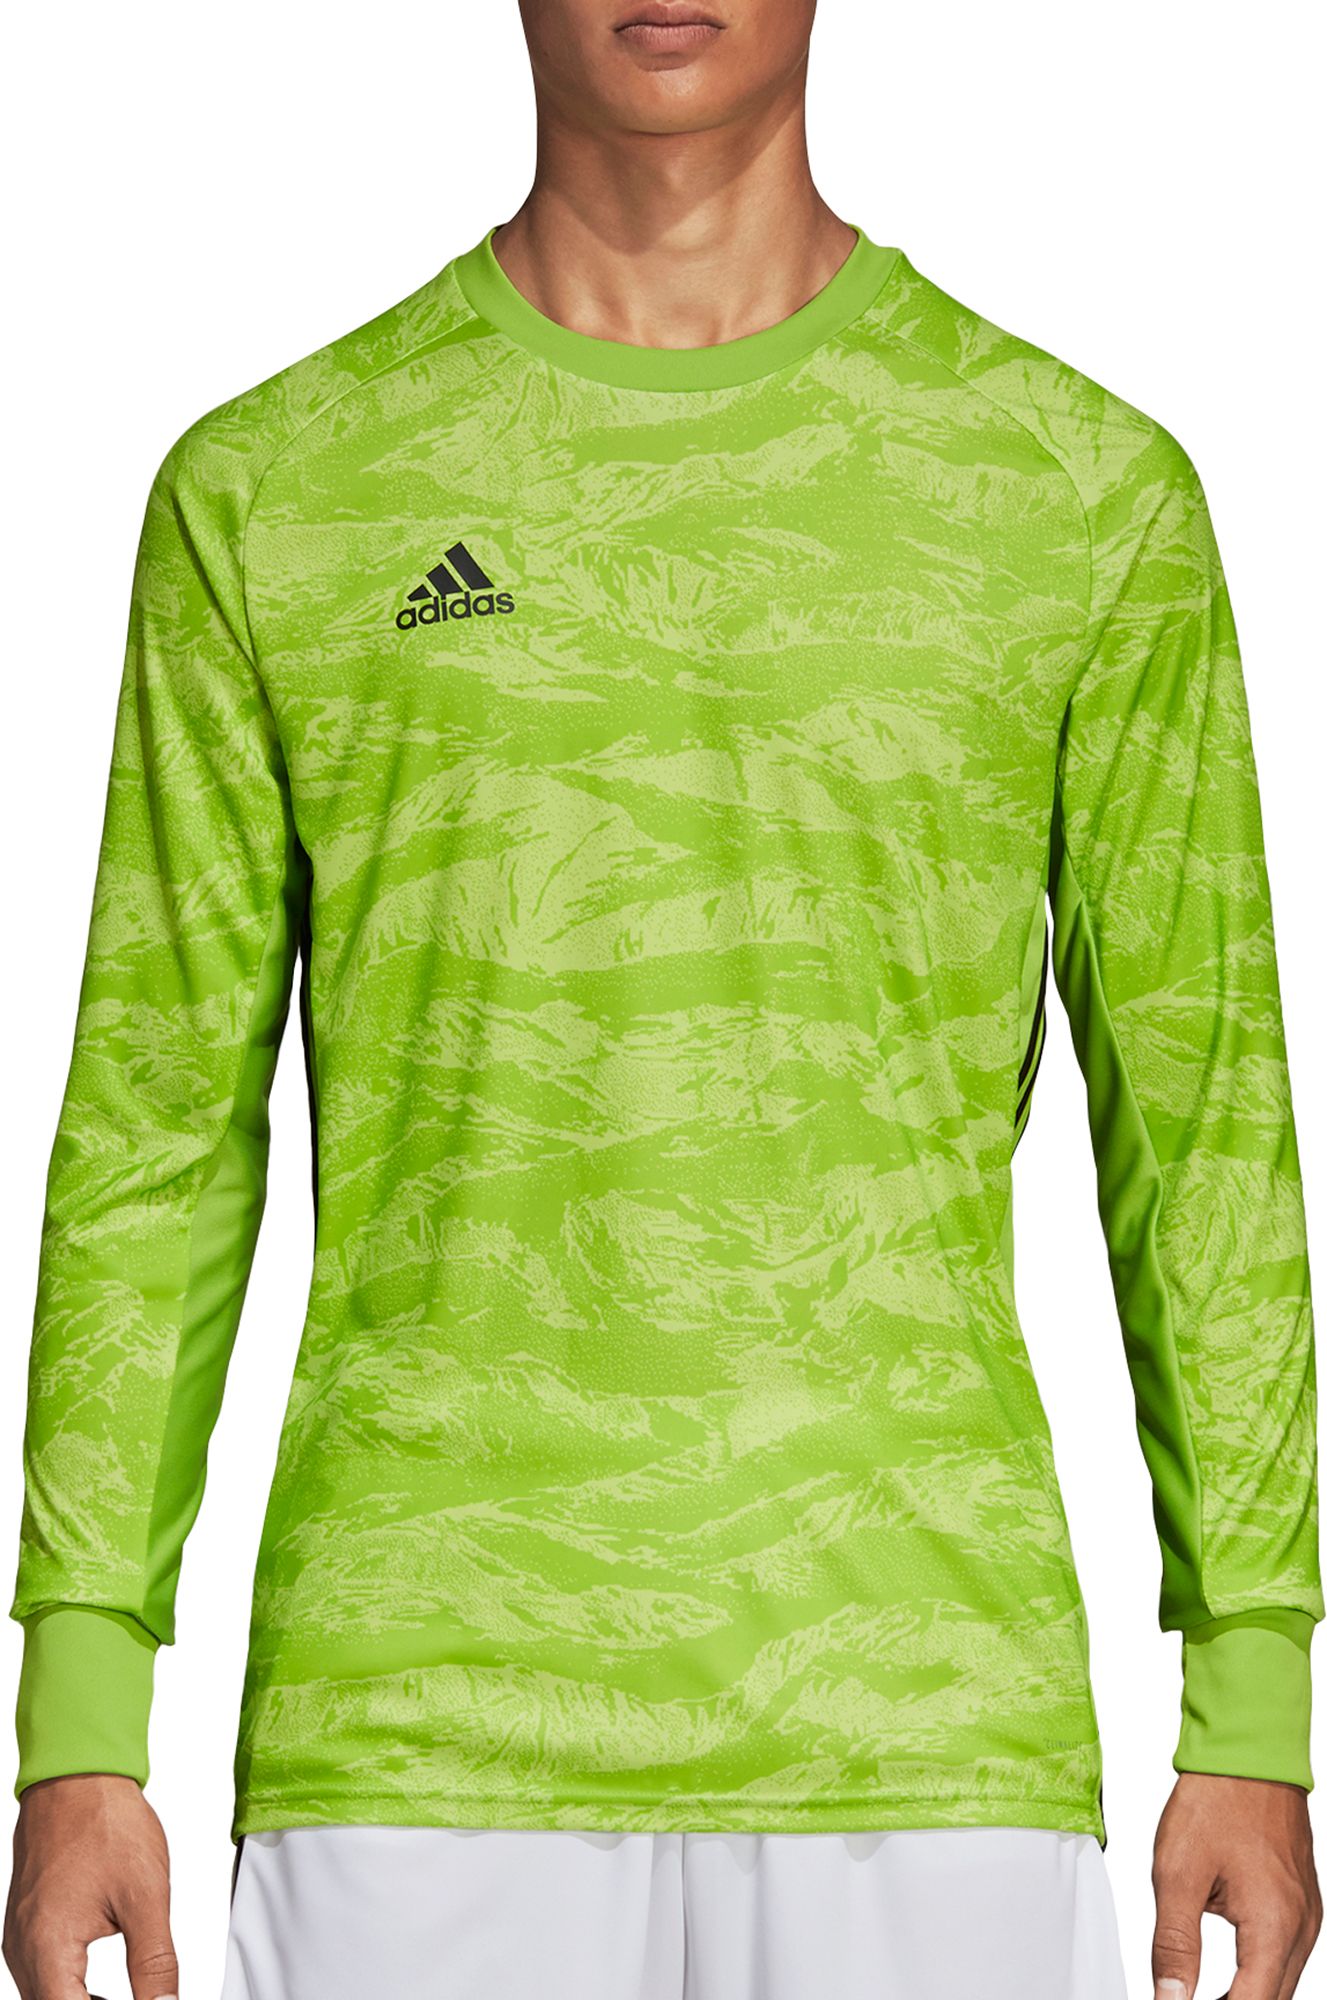 adidas adipro 18 goalkeeper jersey short sleeve